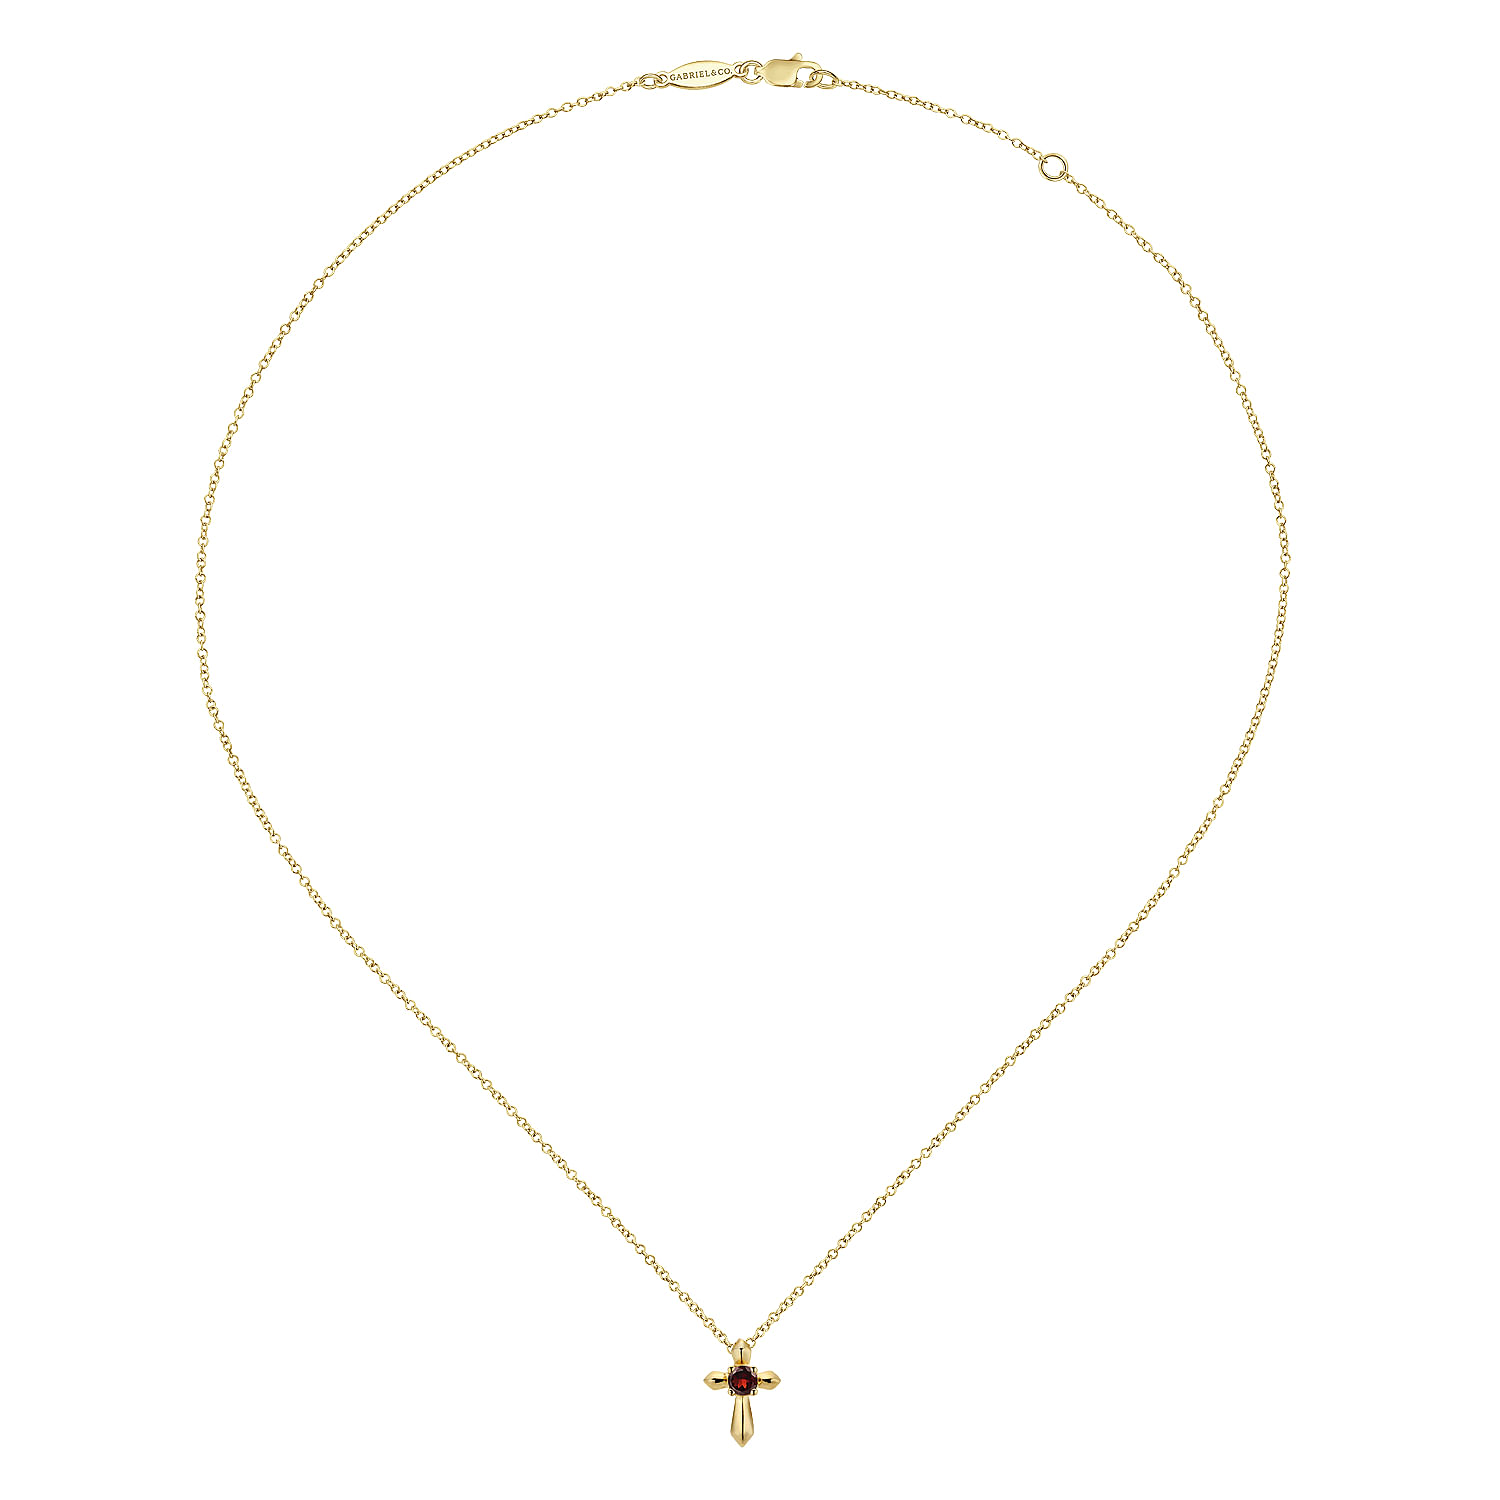 14K Yellow Gold Garnet Cross Pendant Necklace